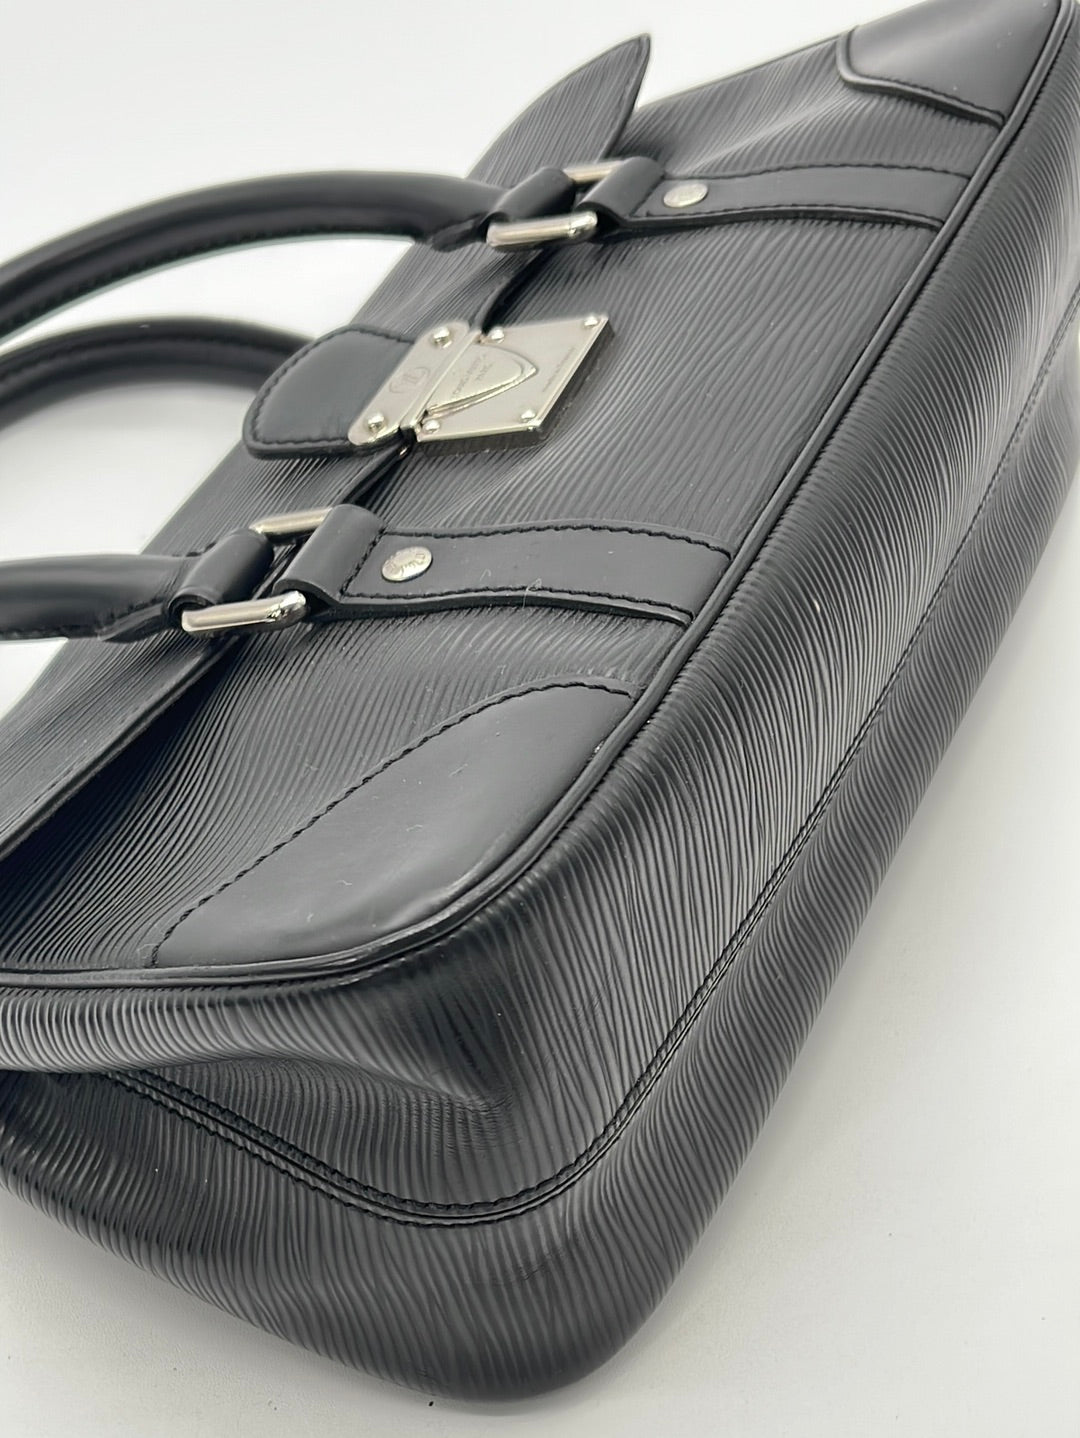 Louis Vuitton Segur Epi Leather Shoulder Bag on SALE